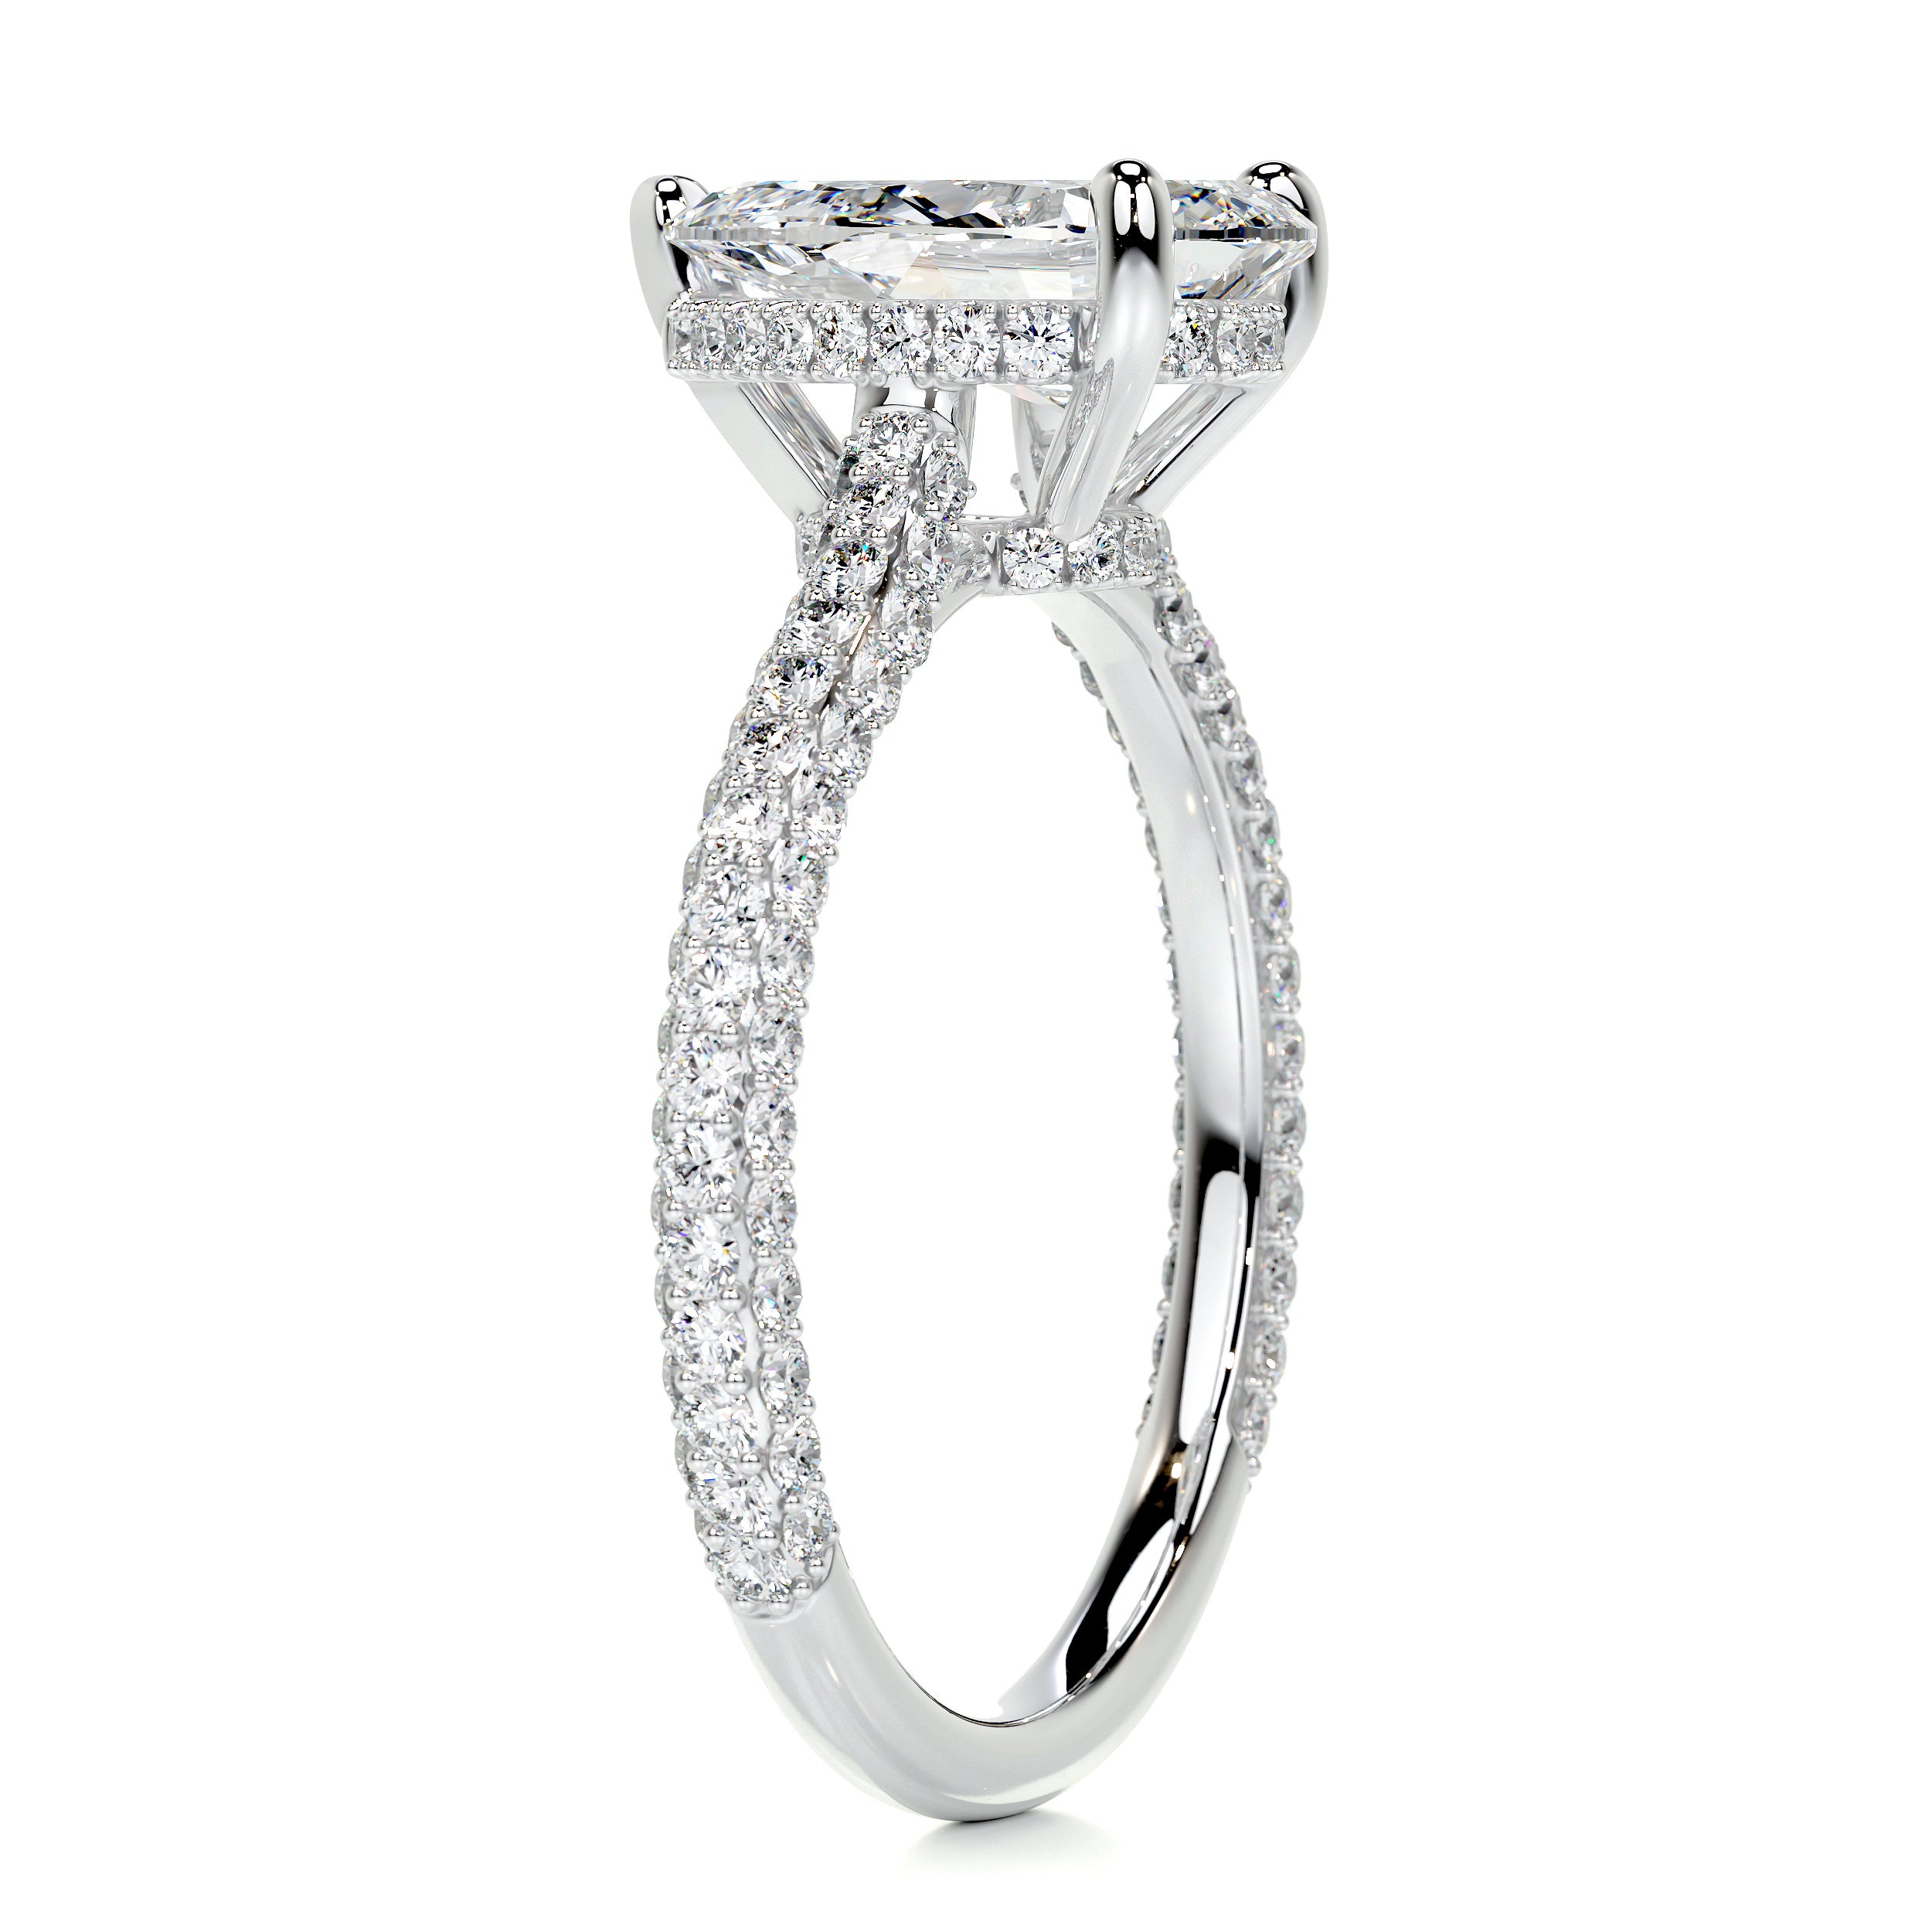 Nakia Diamond Engagement Ring   (2.00 Carat) -14K White Gold